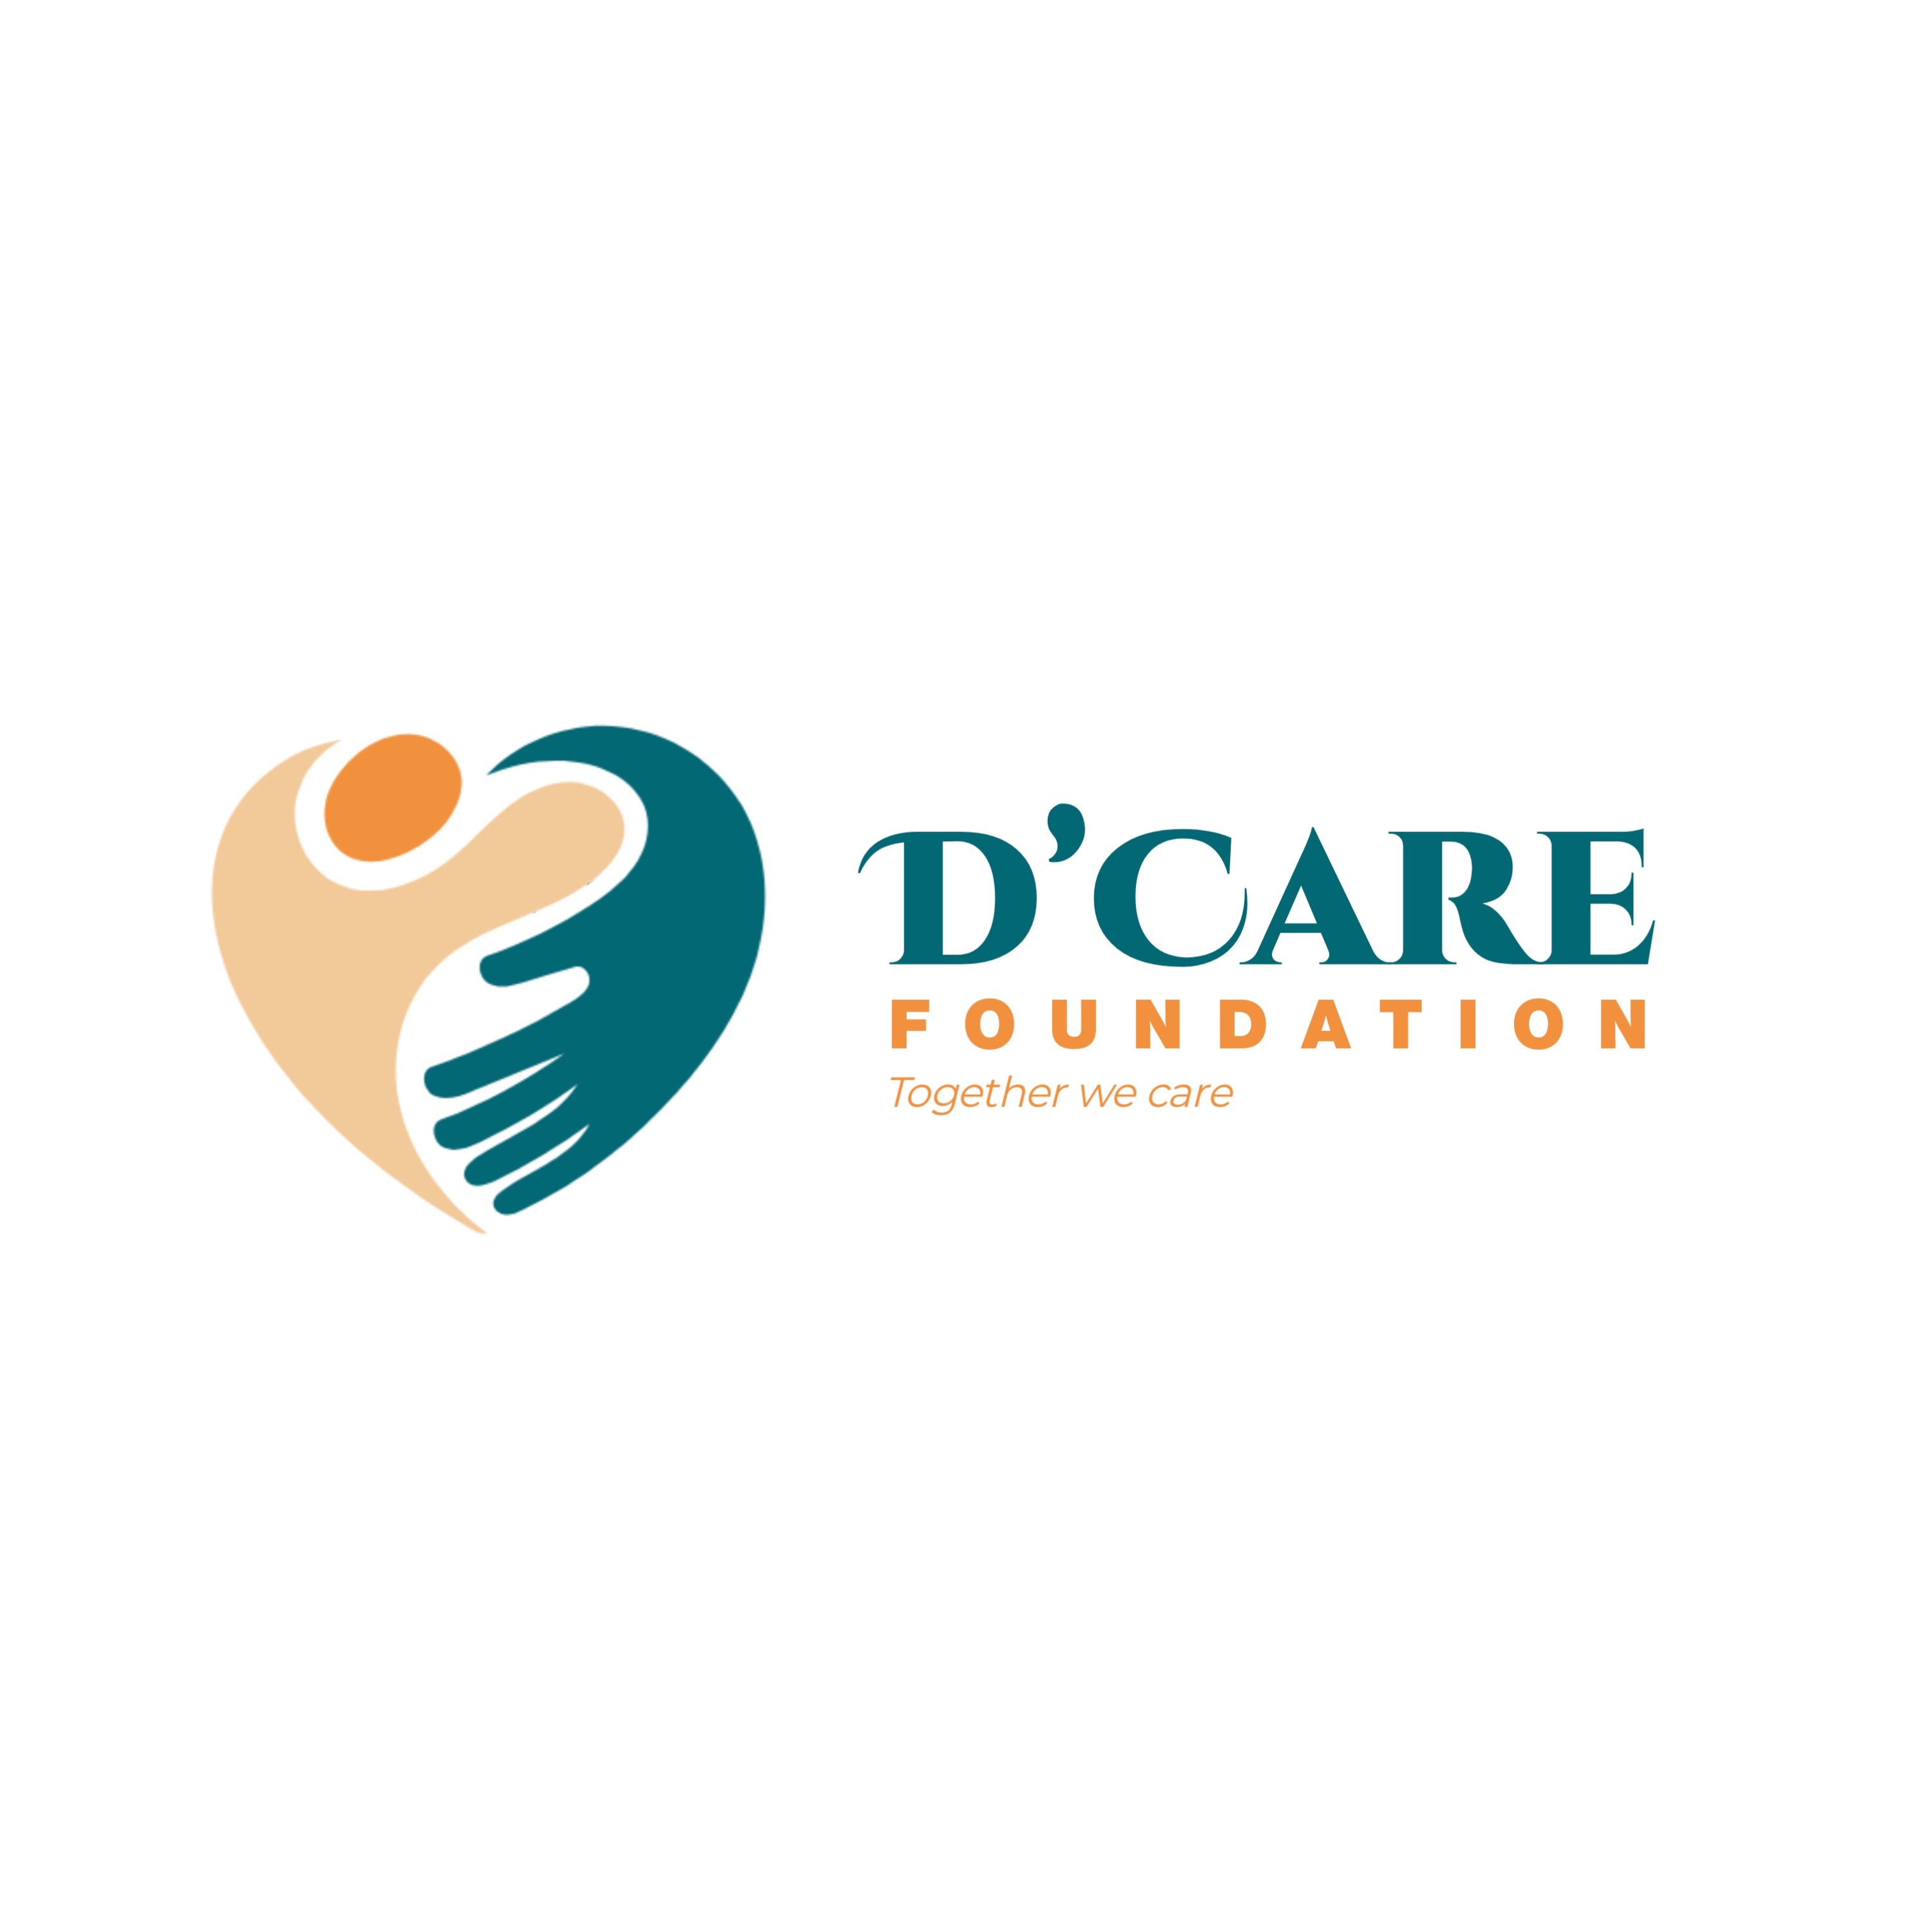 D’care foundation 